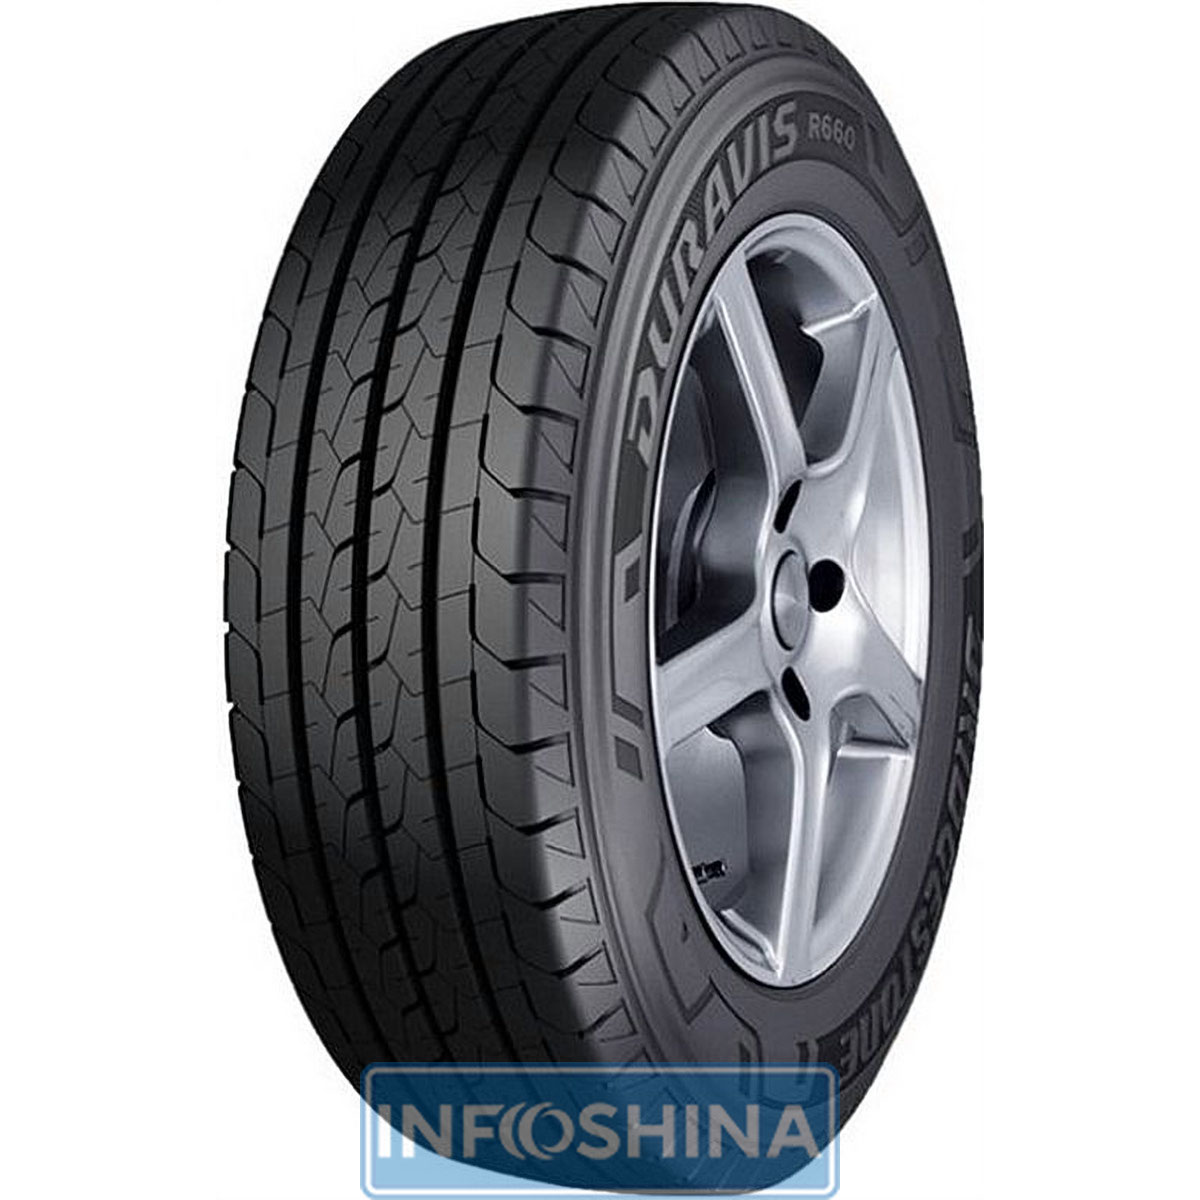 Купить шины Bridgestone Duravis R660 185/75 R16C 104/102R